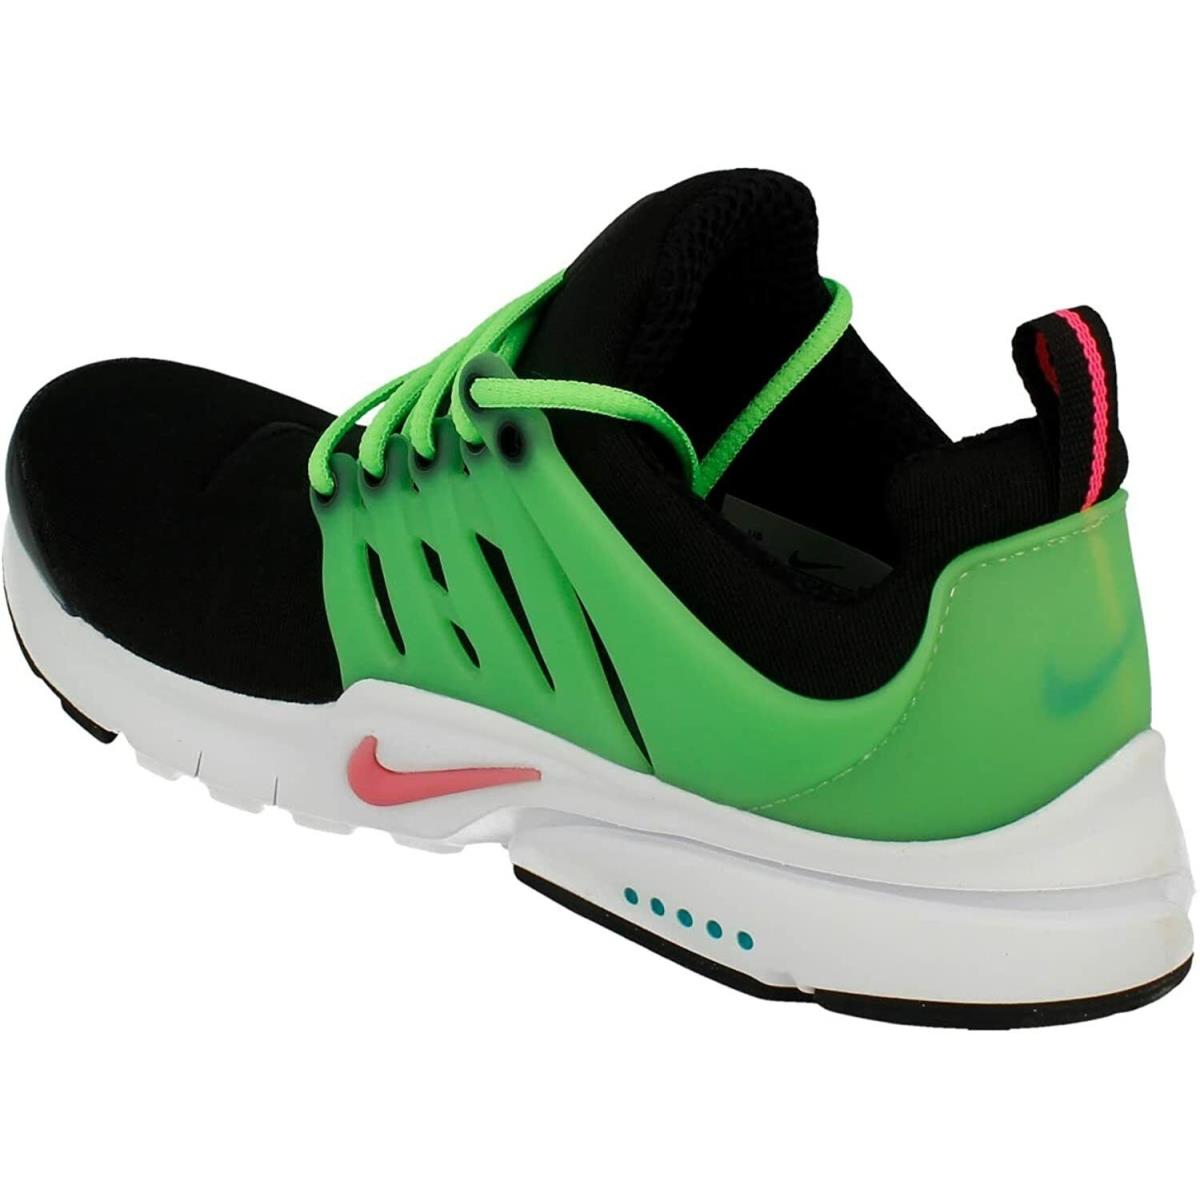 Nike shoes top - Black/Hyper Pink/white 2